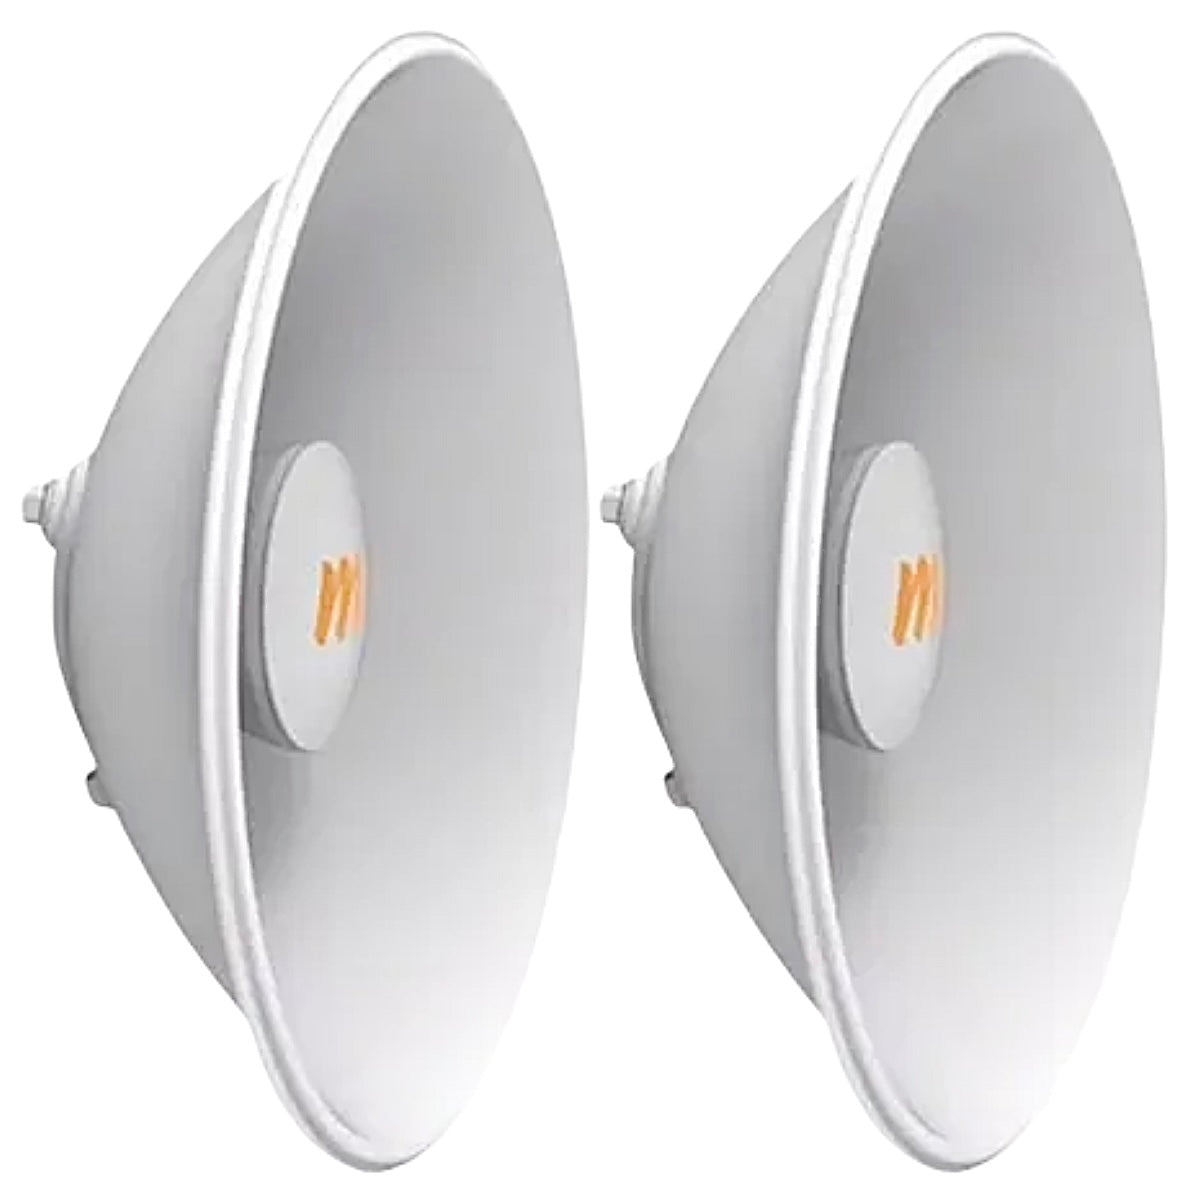 N5-X20 - 2 Pack Antennas (Dish)